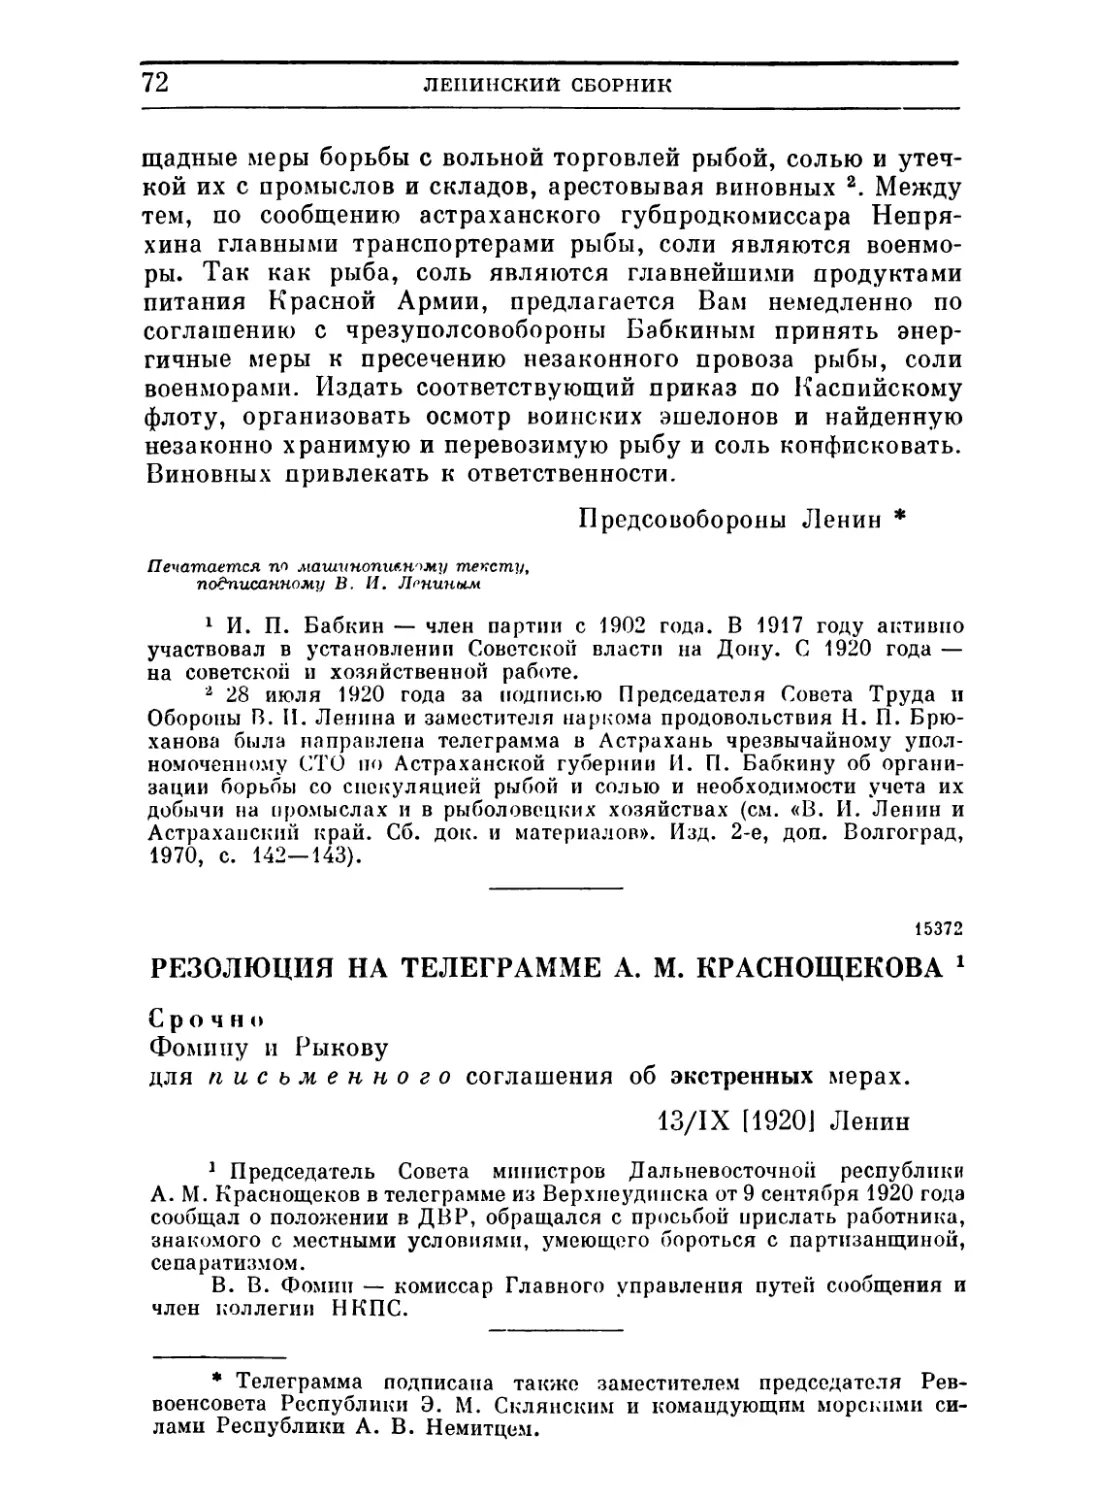 Резолюция на телеграмме А. М. Краснощекова. 13 сентября 1920